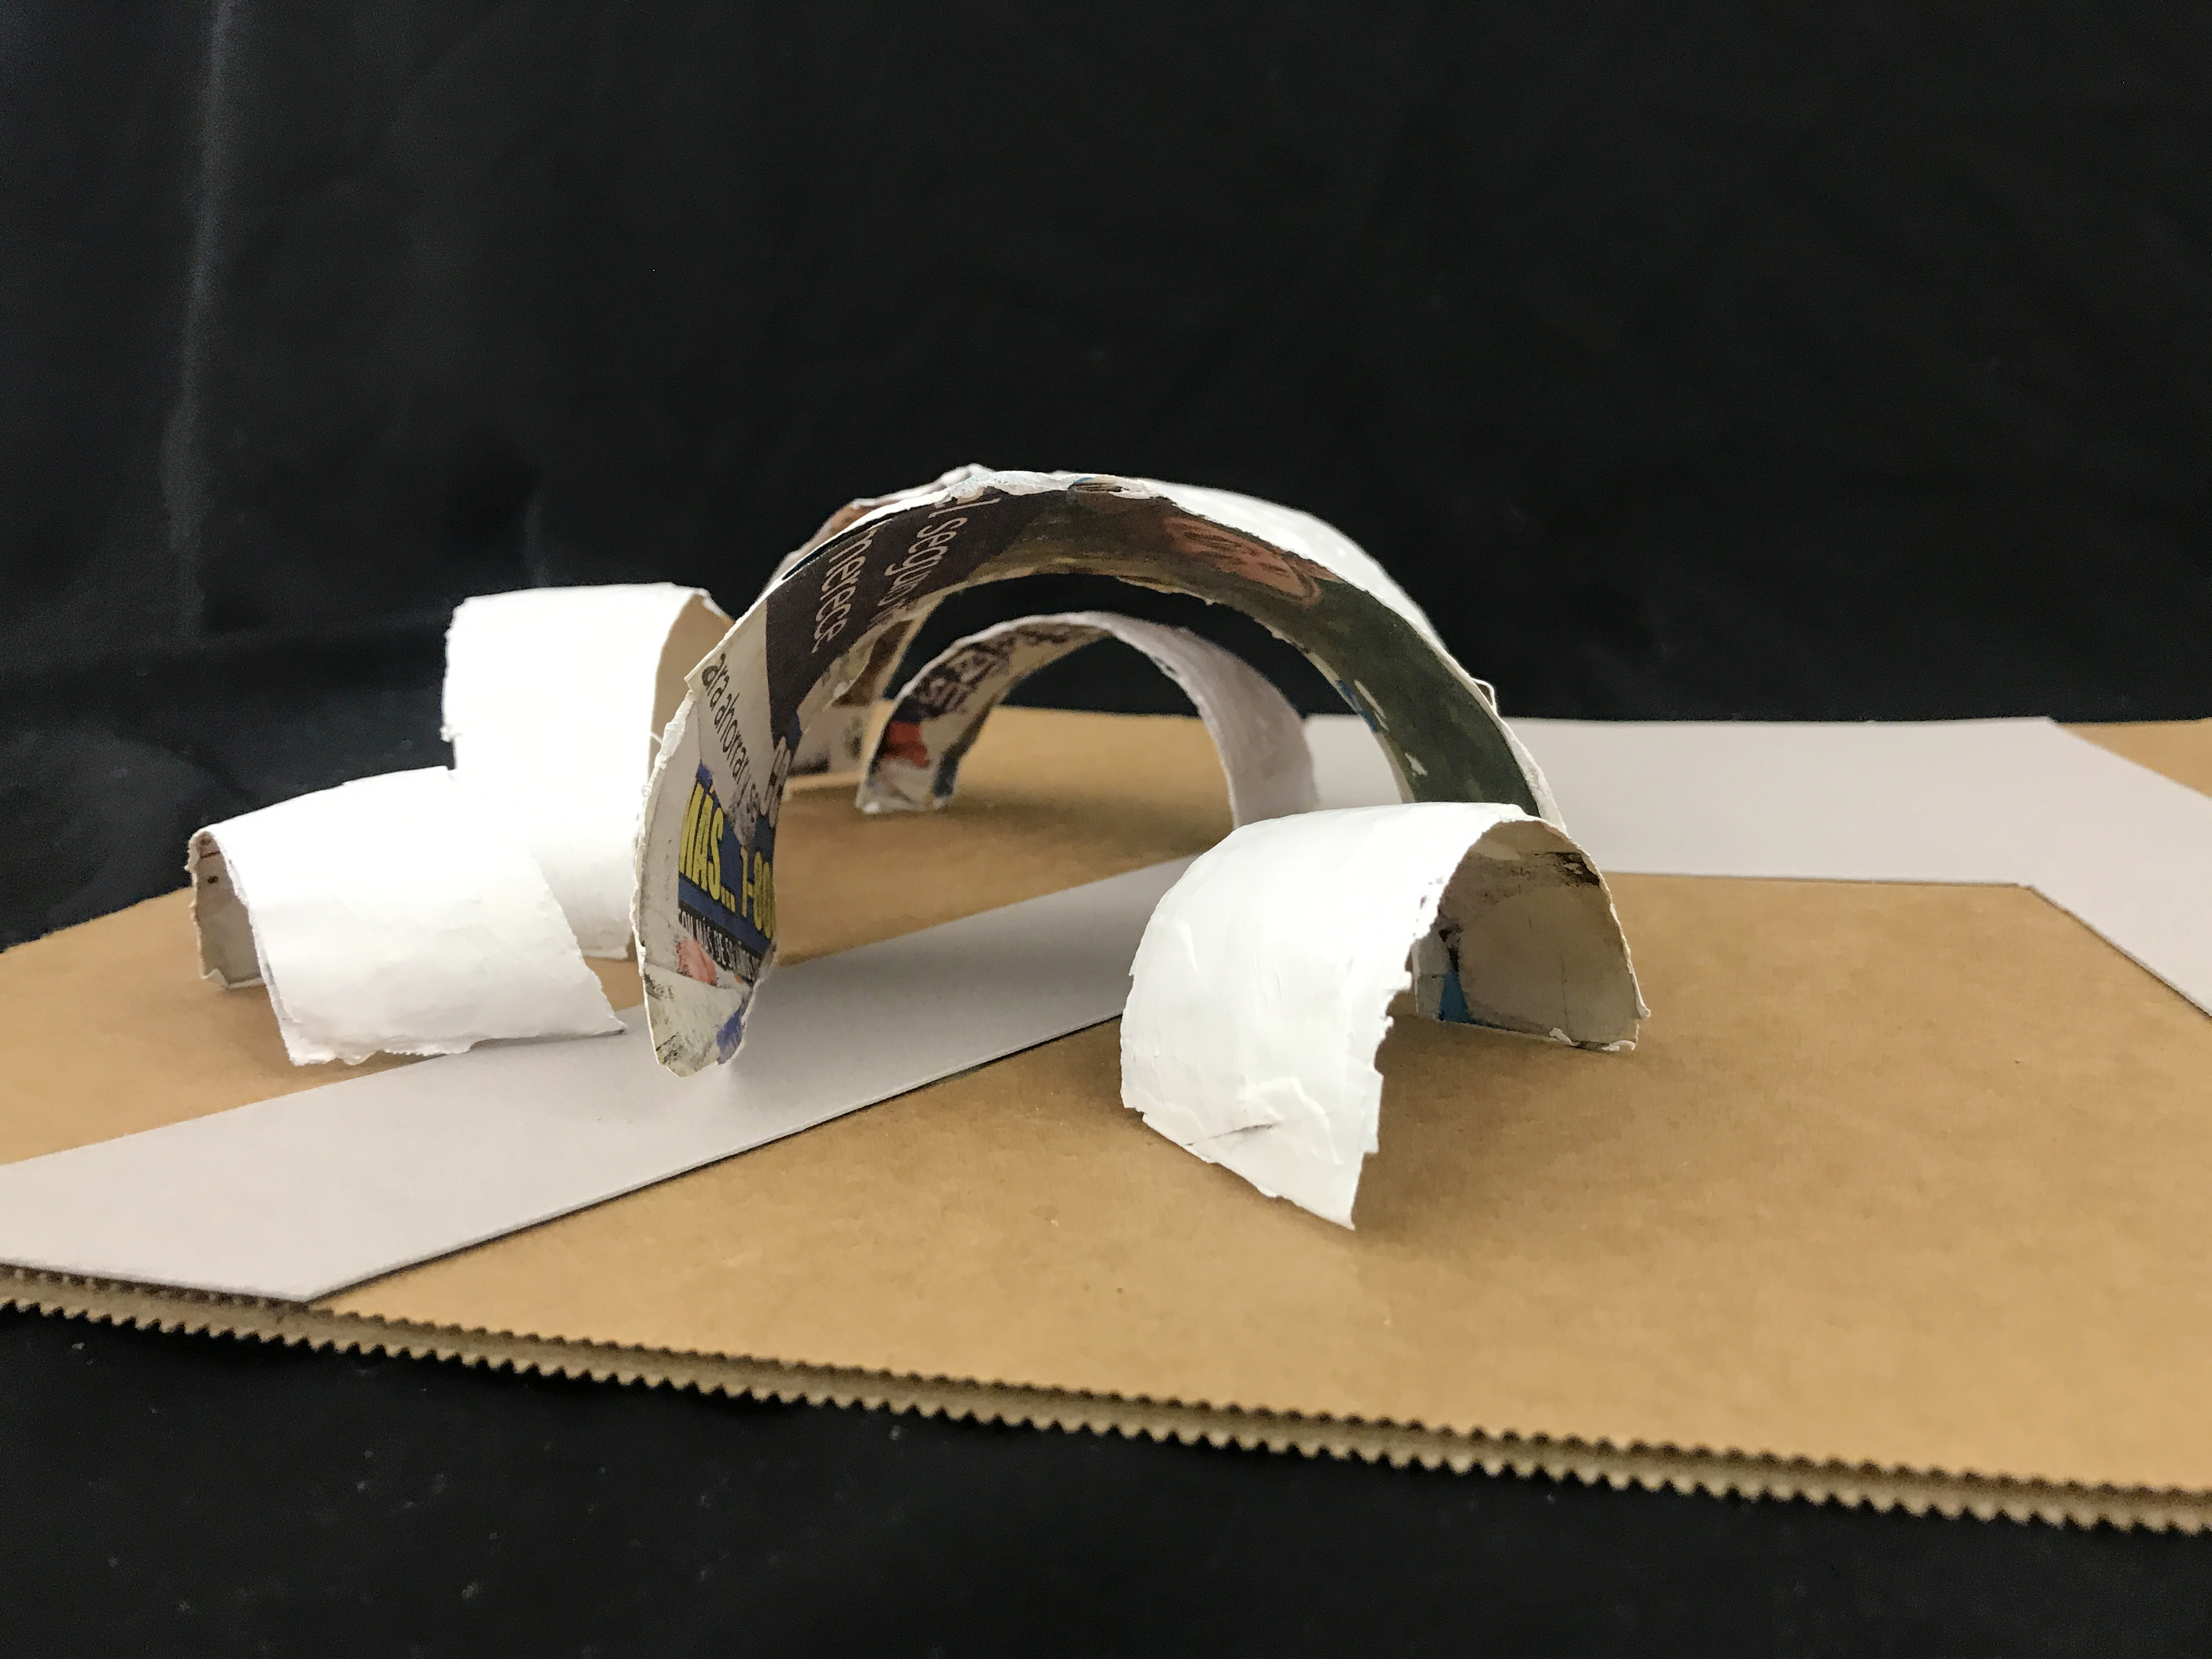 Paper model configuration 2.